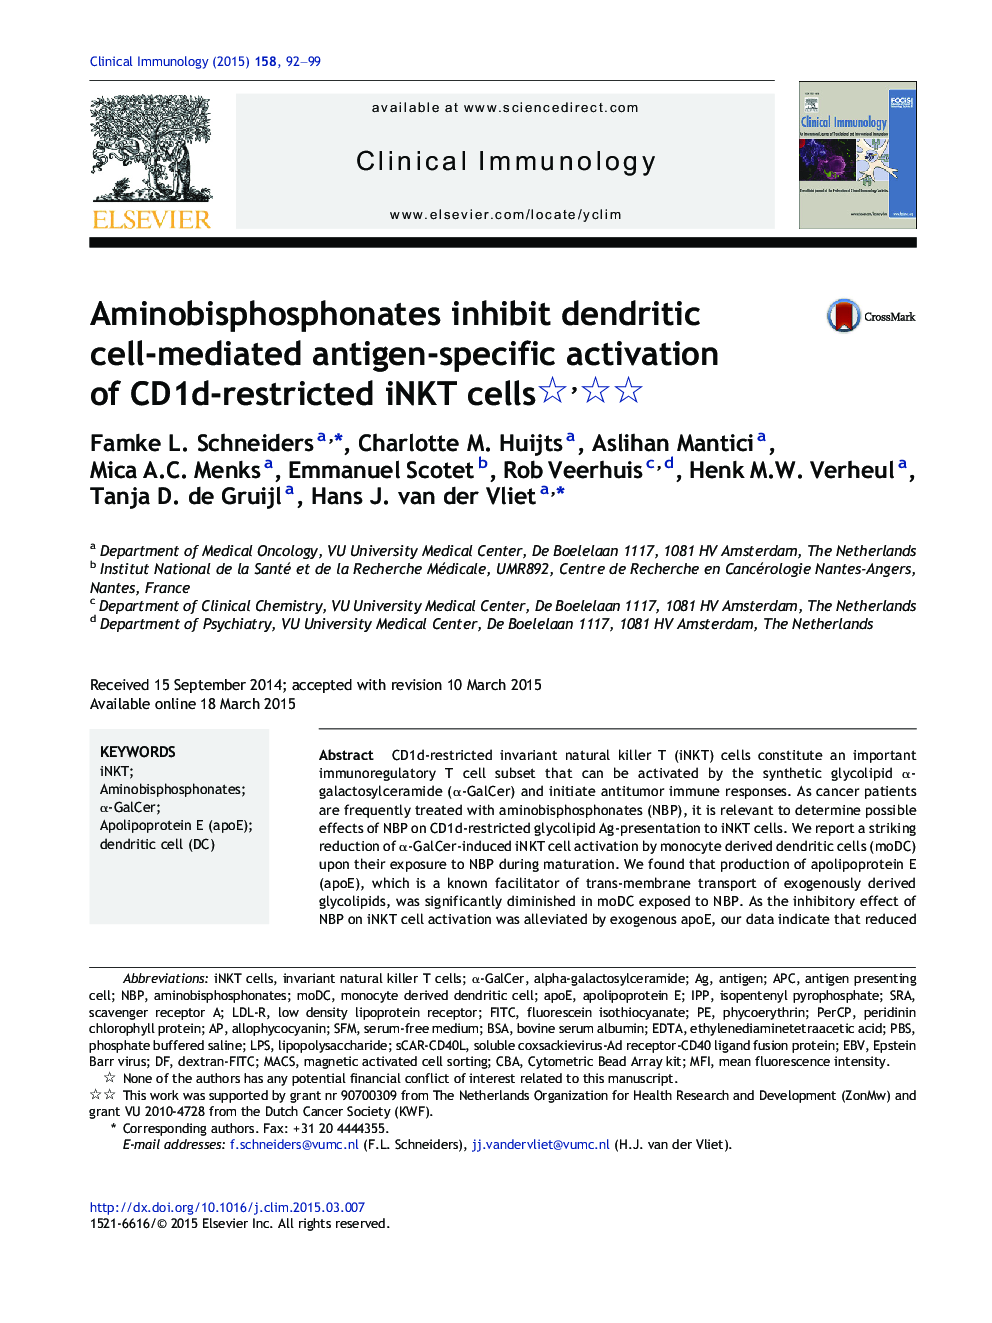 Aminobisphosphonates inhibit dendritic cell-mediated antigen-specific activation of CD1d-restricted iNKT cells